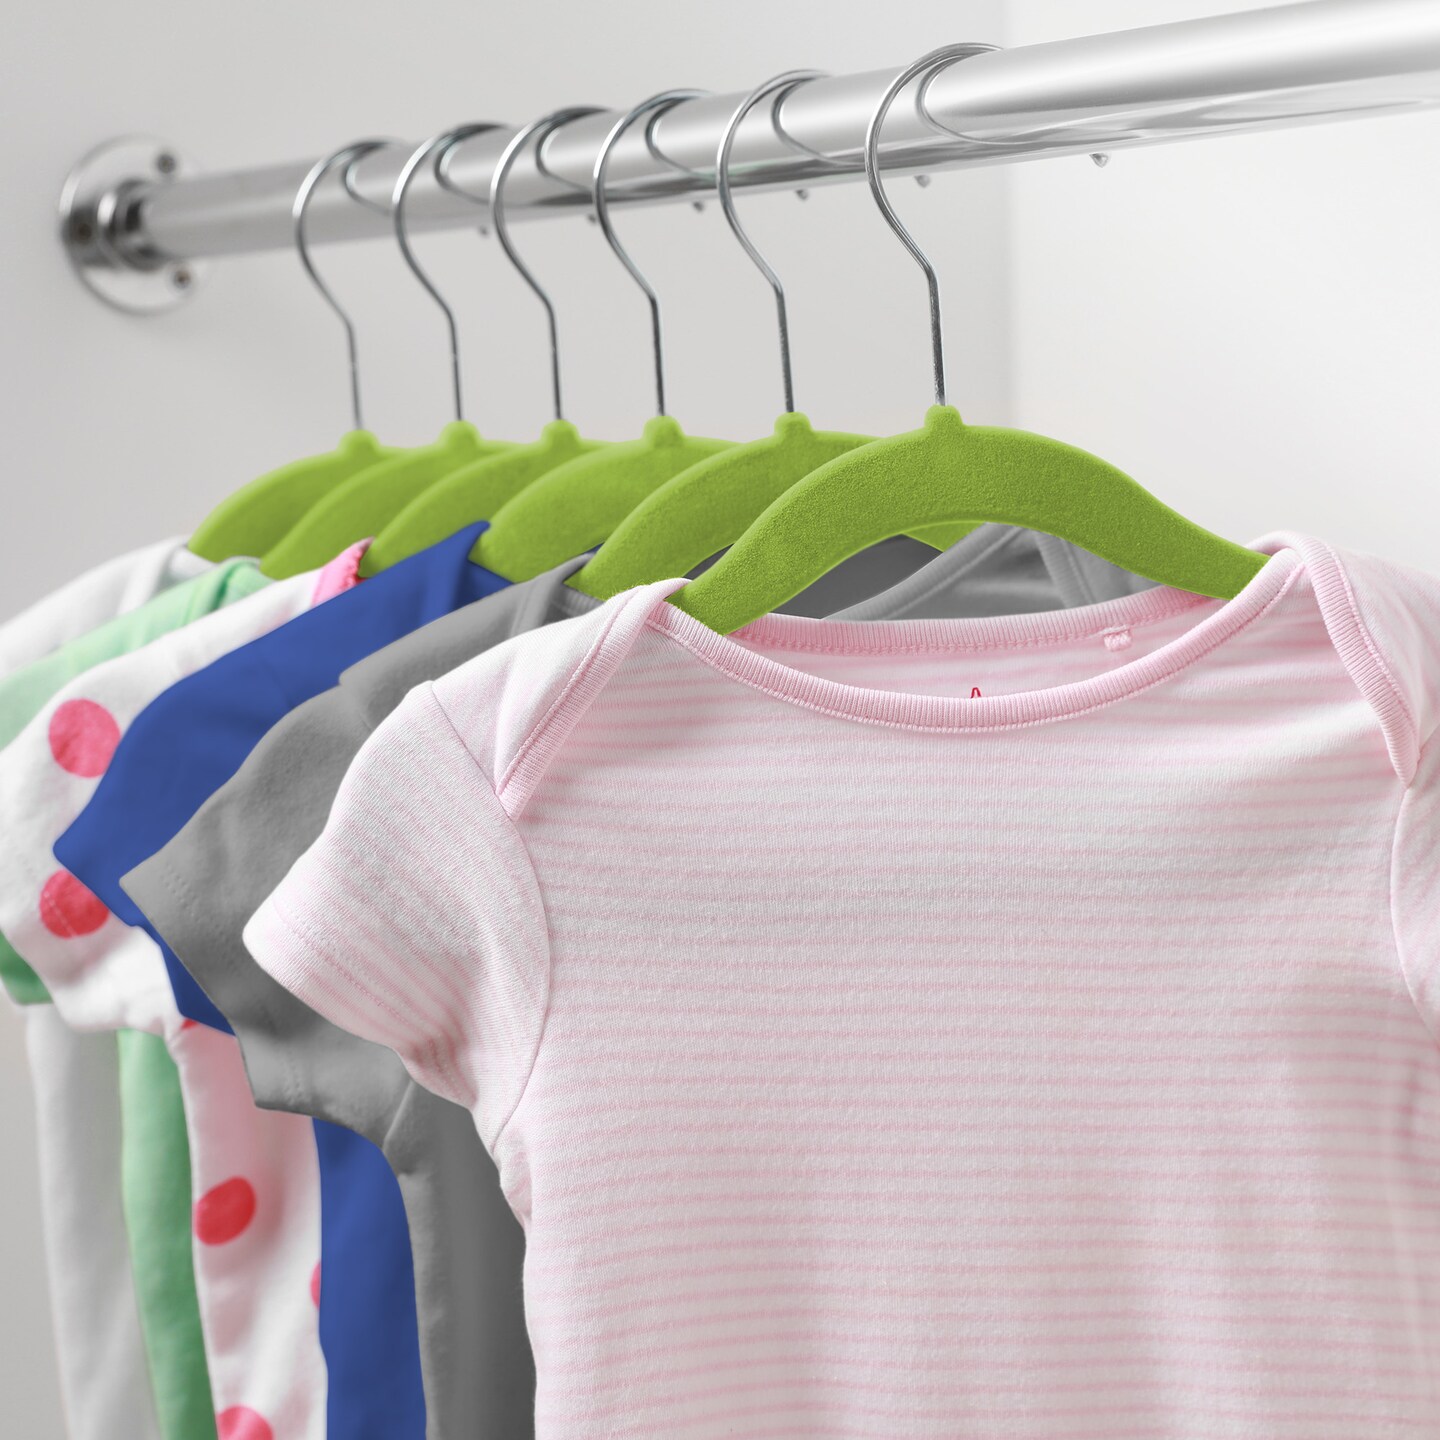 Delta Children Infant and Toddler Plastic Clothing Hangers, 100 Pack, White